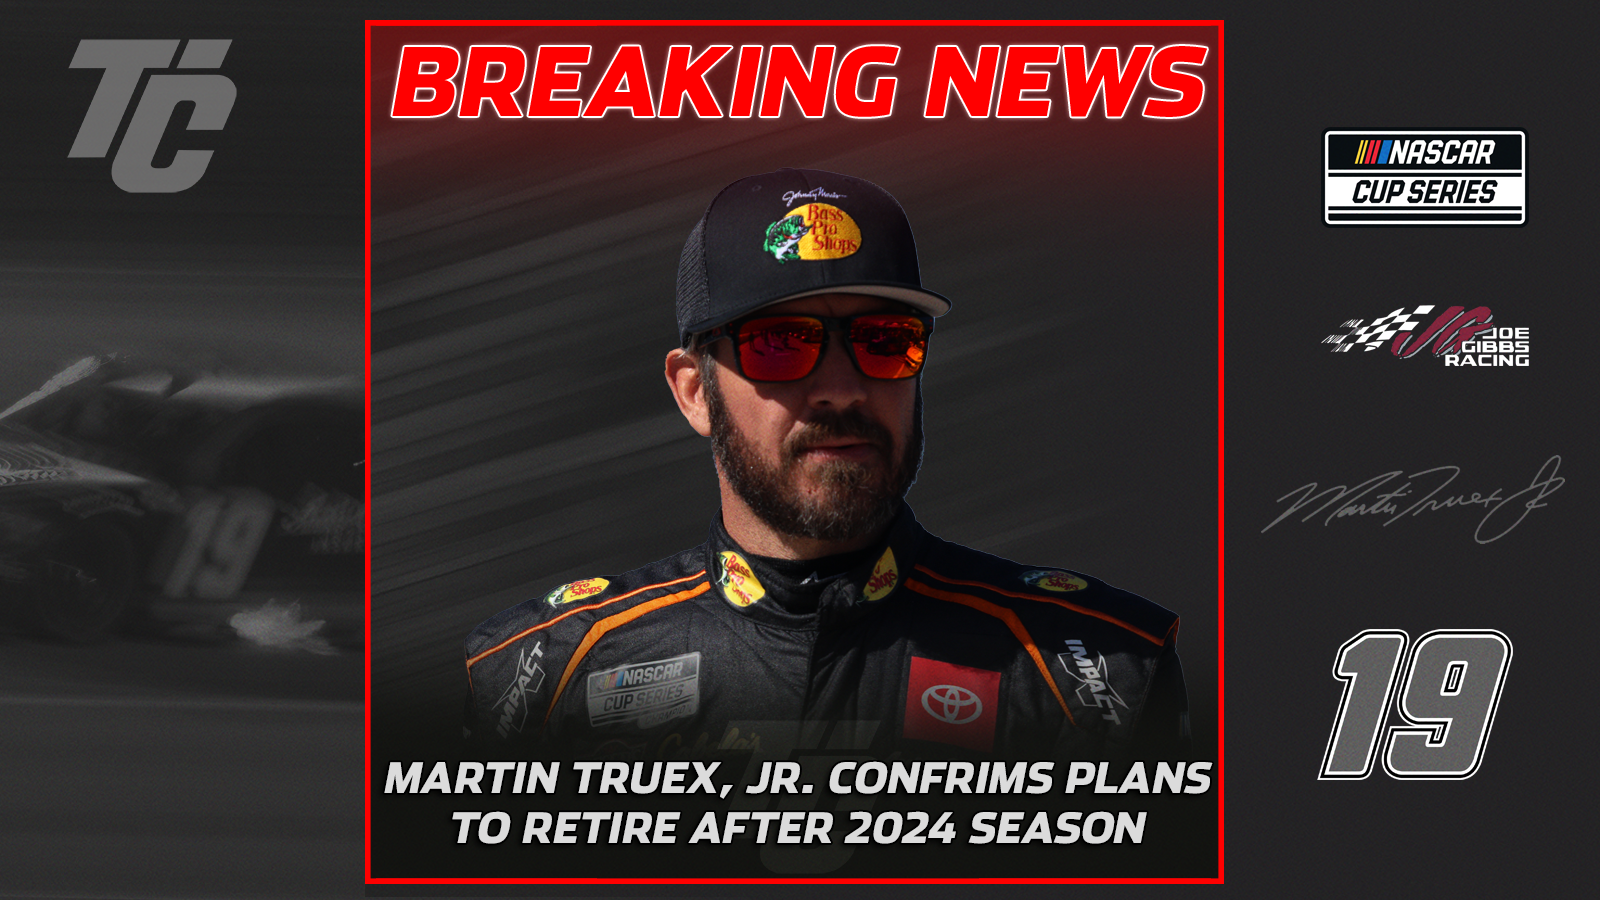 Martin Truex Jr Joe Gibbs Racing Retirement NASCAR Cup Series